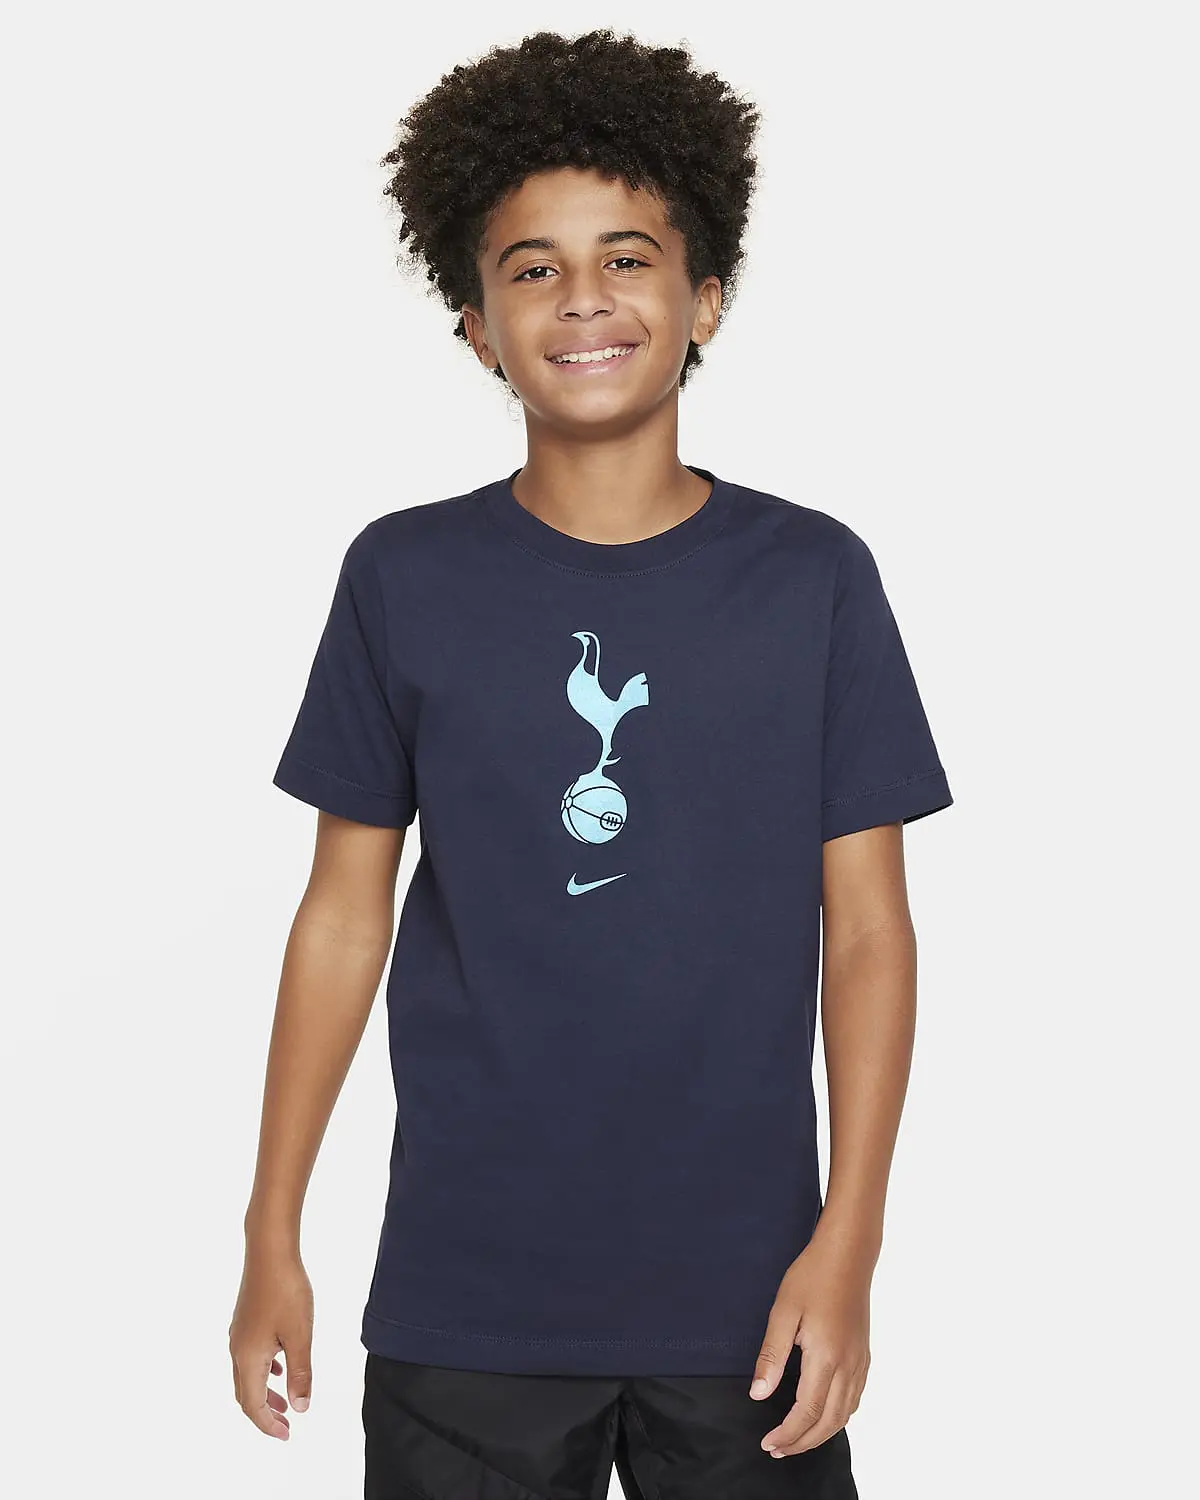 Nike Crest Tottenham Hotspur. 1